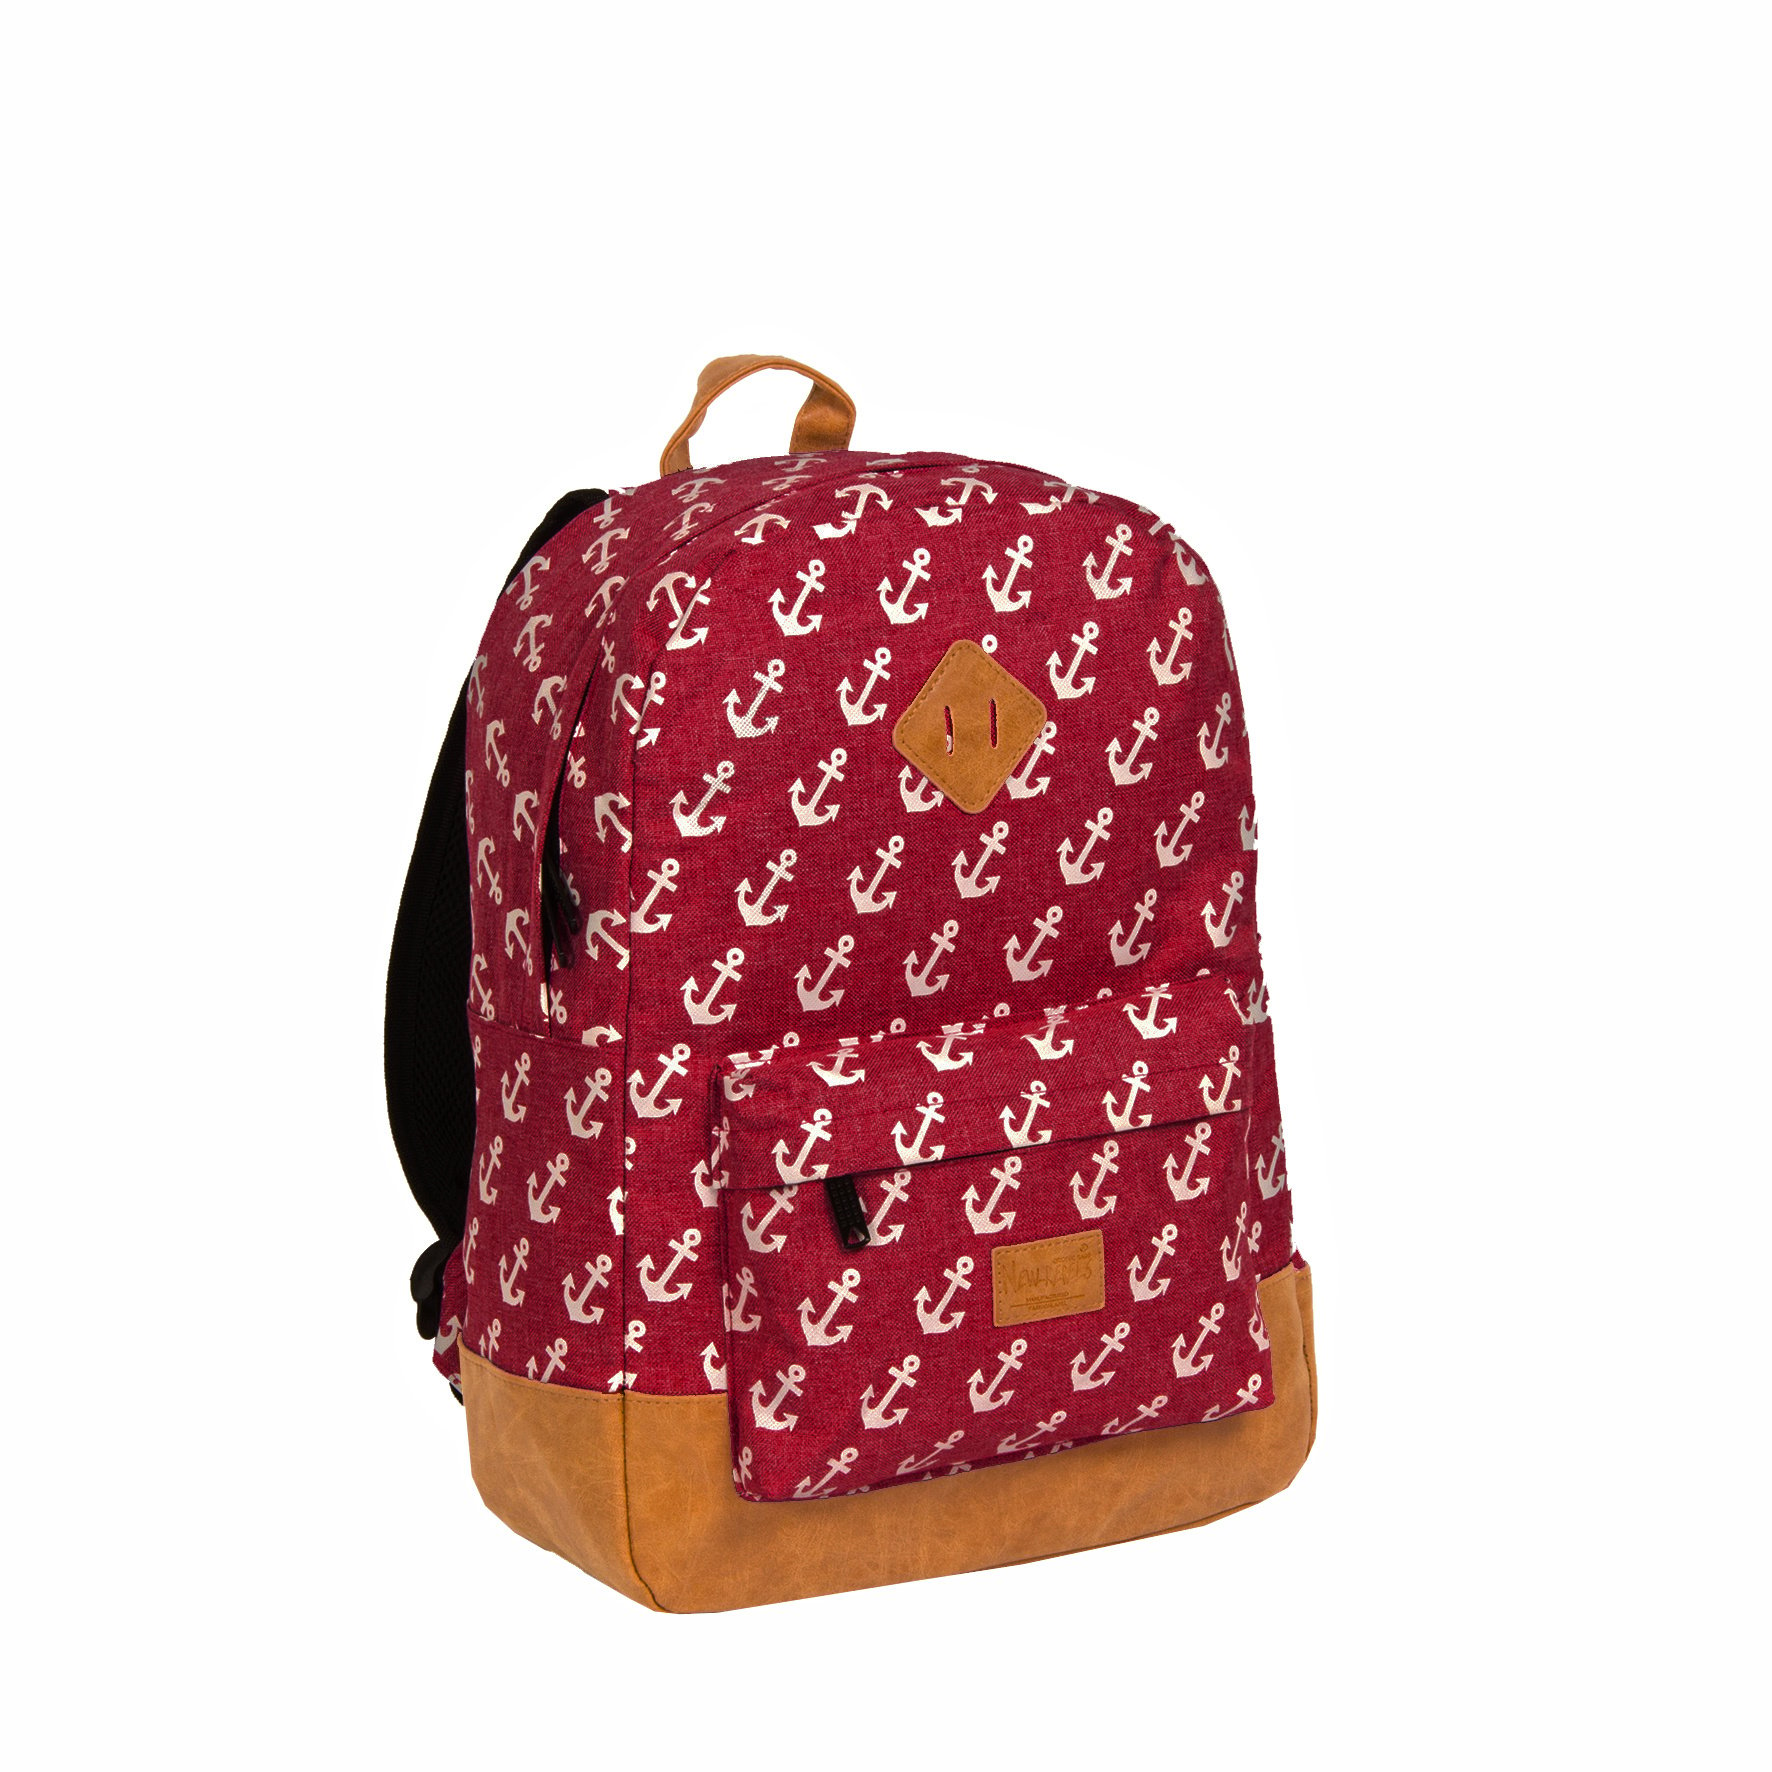 New Rebels® Sealife Backpack Burgundy